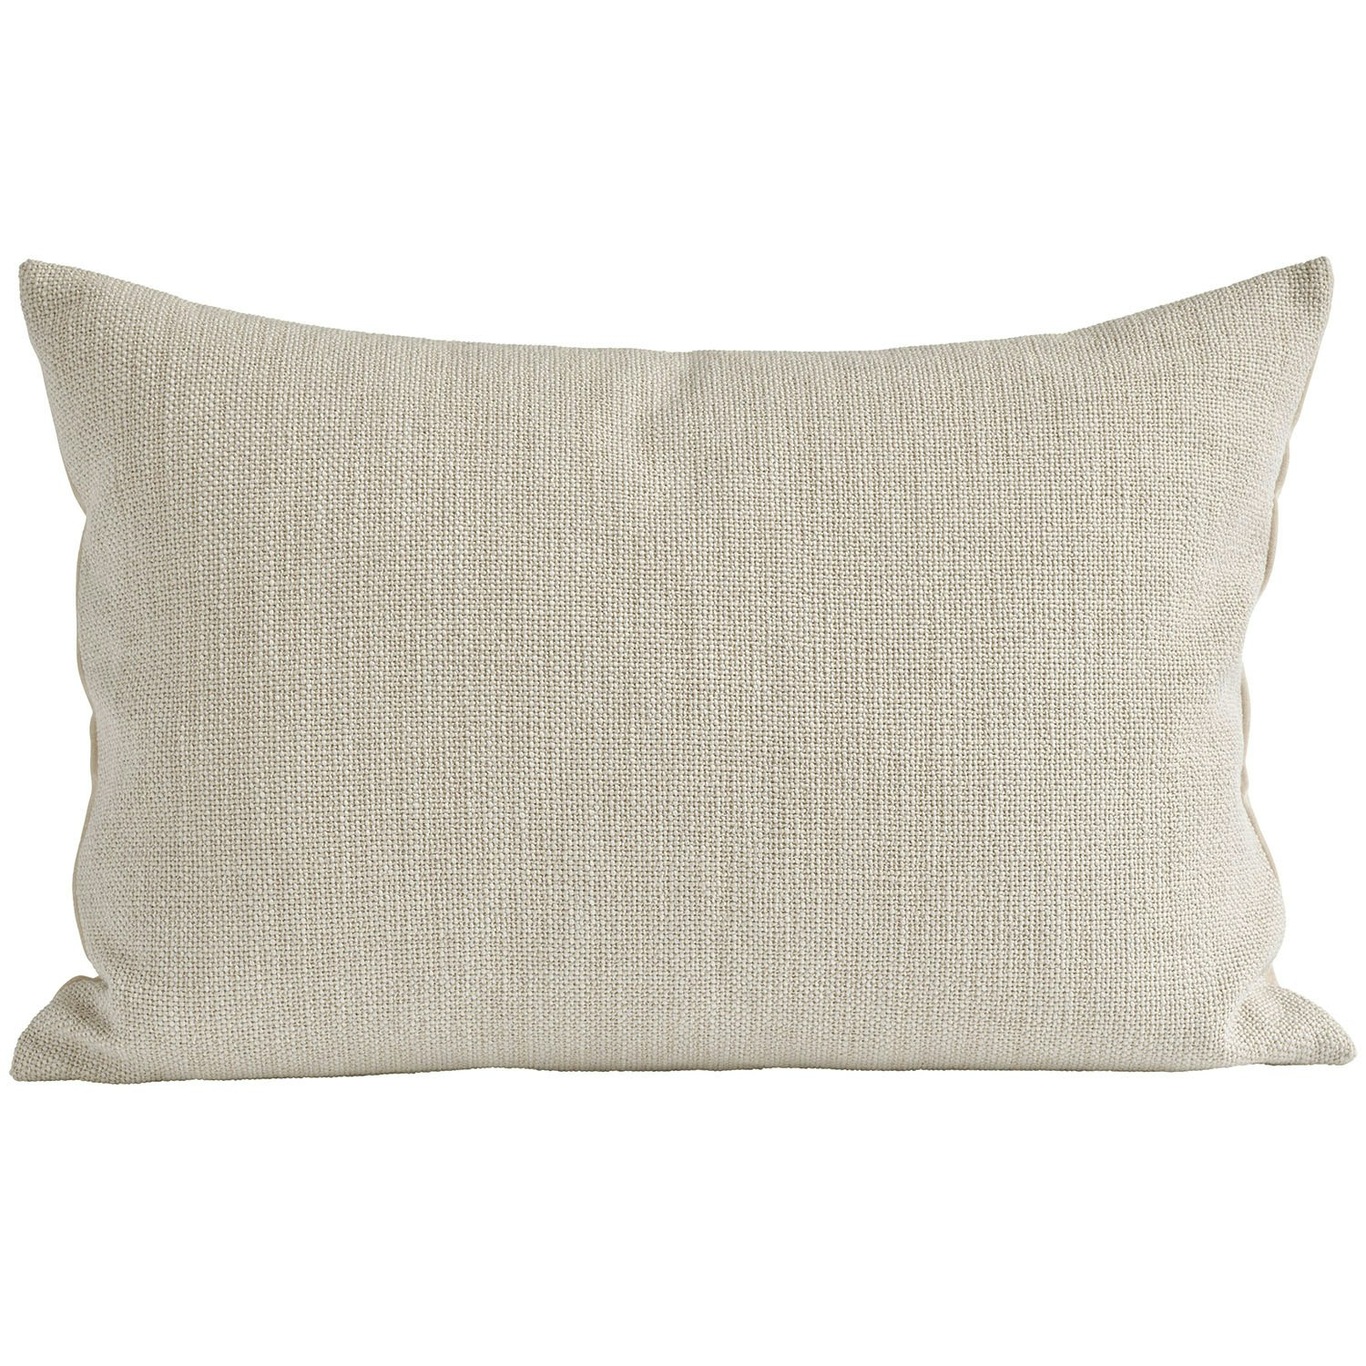 Barbat Cushion Cover Sand, 50x75 cm